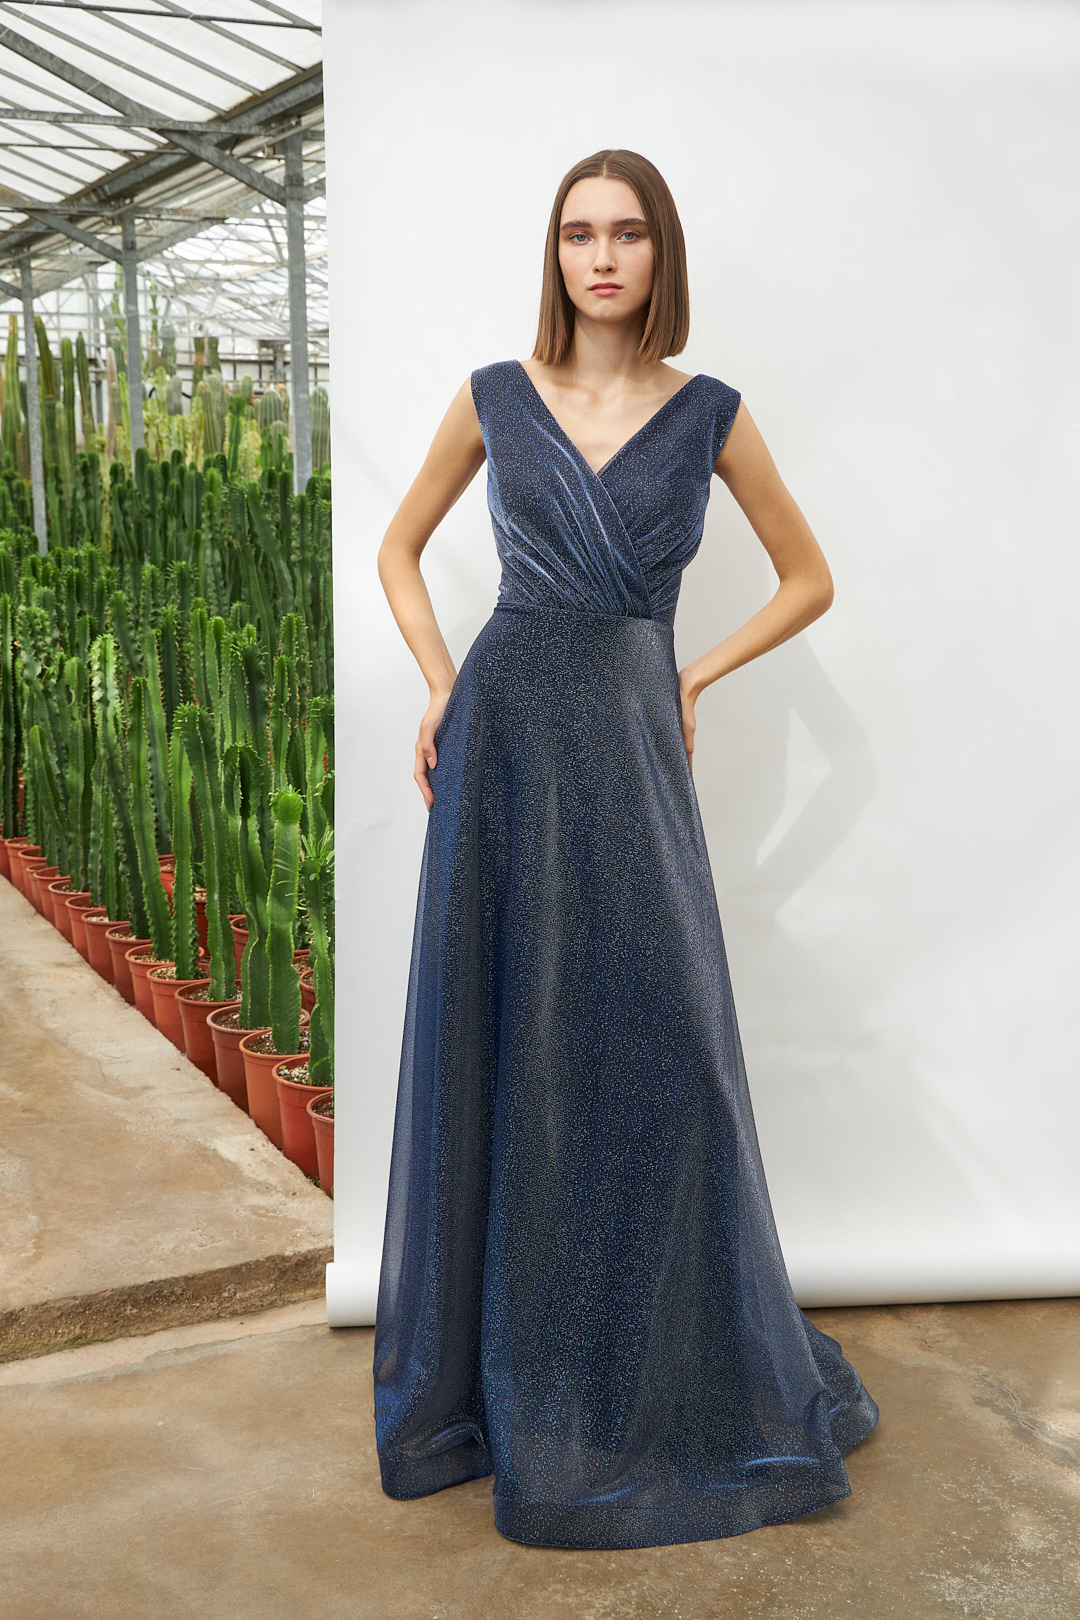 Классические платья / Long classic dress with shining fabric and wide straps